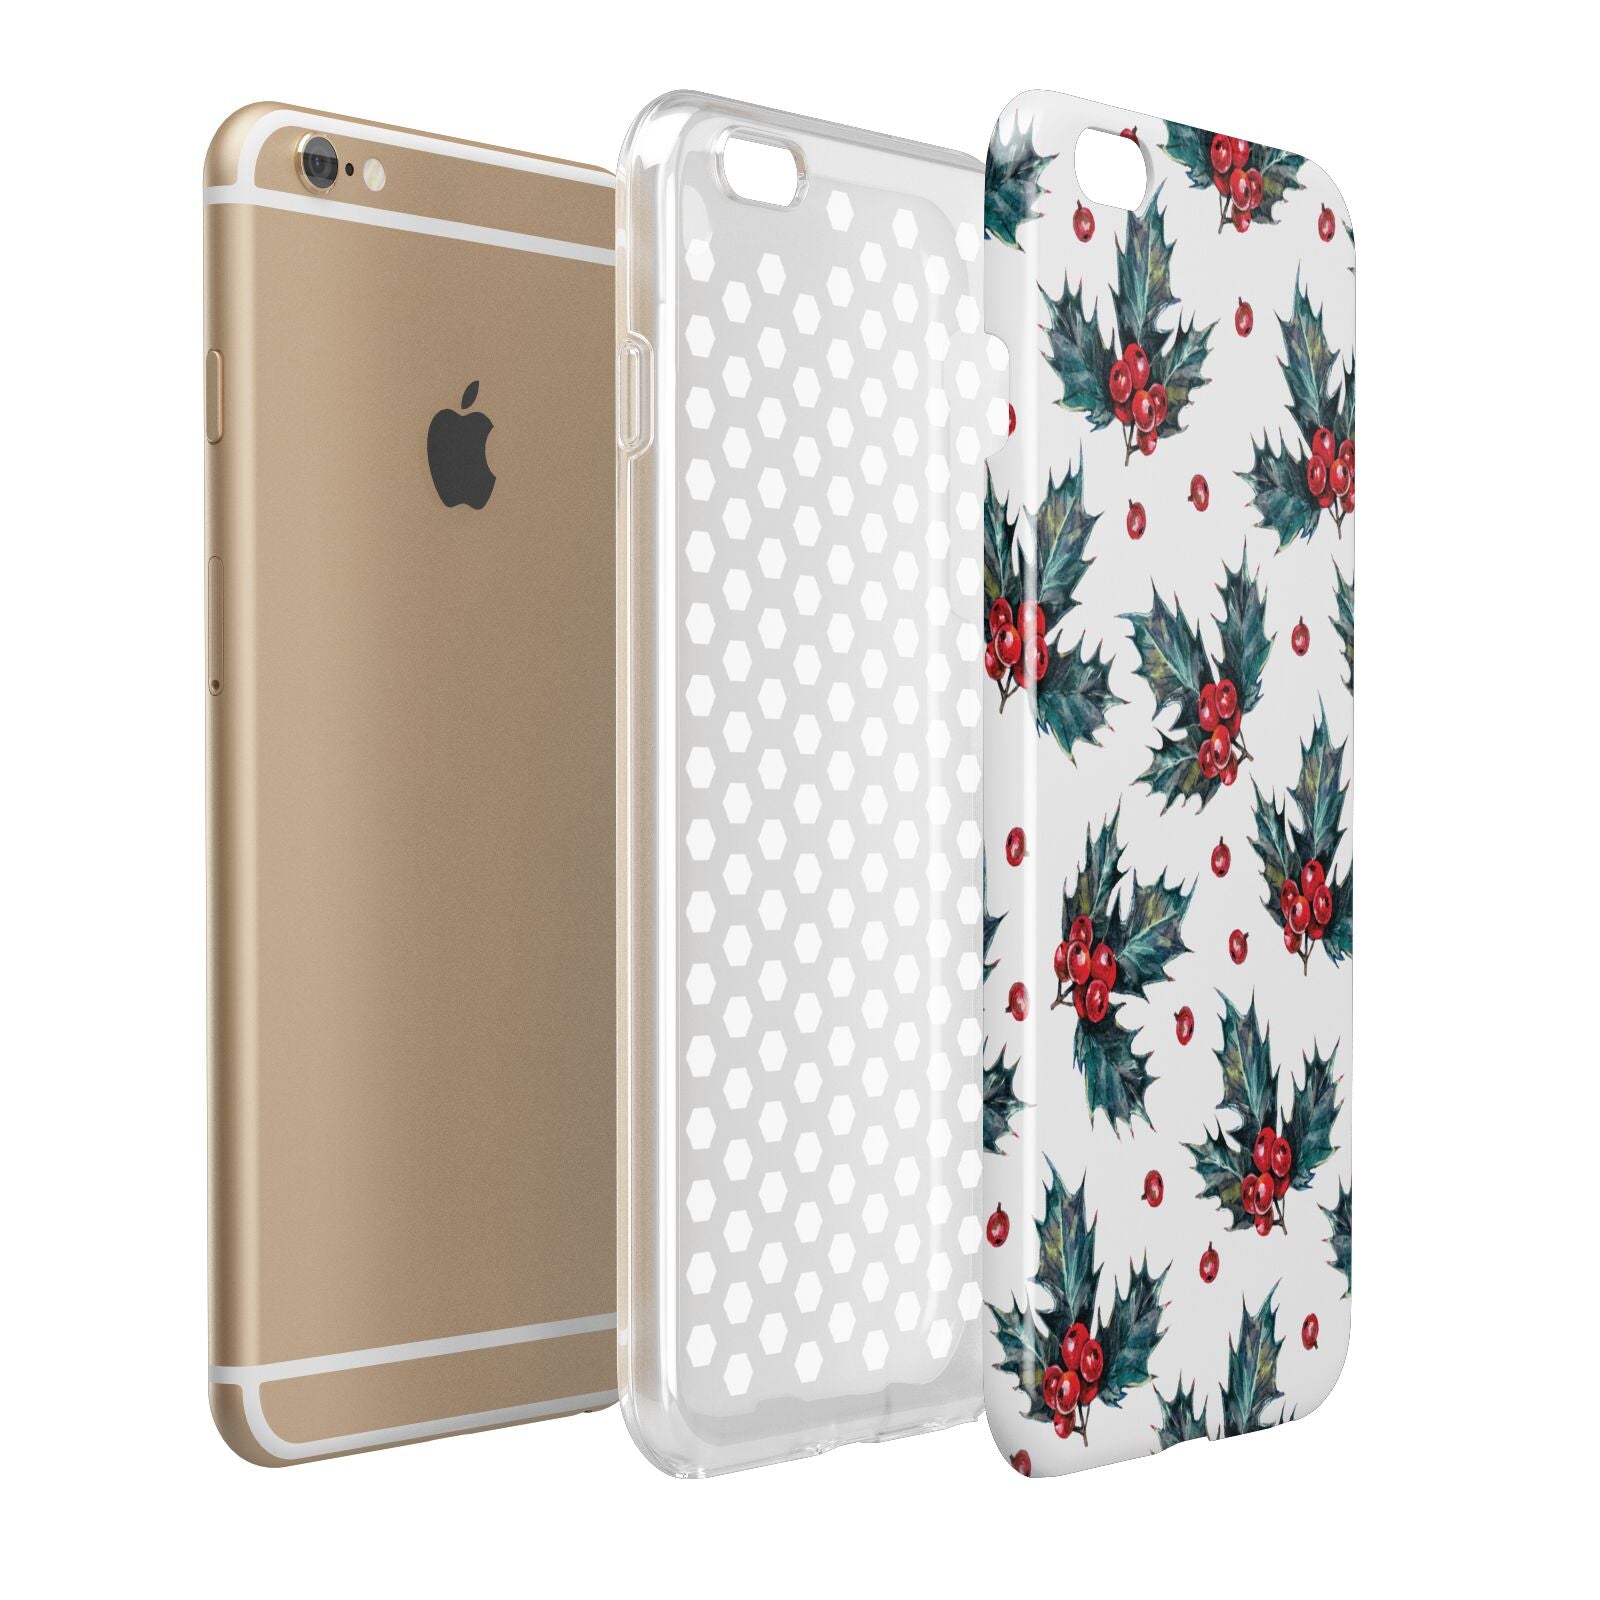 Holly berry Apple iPhone 6 Plus 3D Tough Case Expand Detail Image